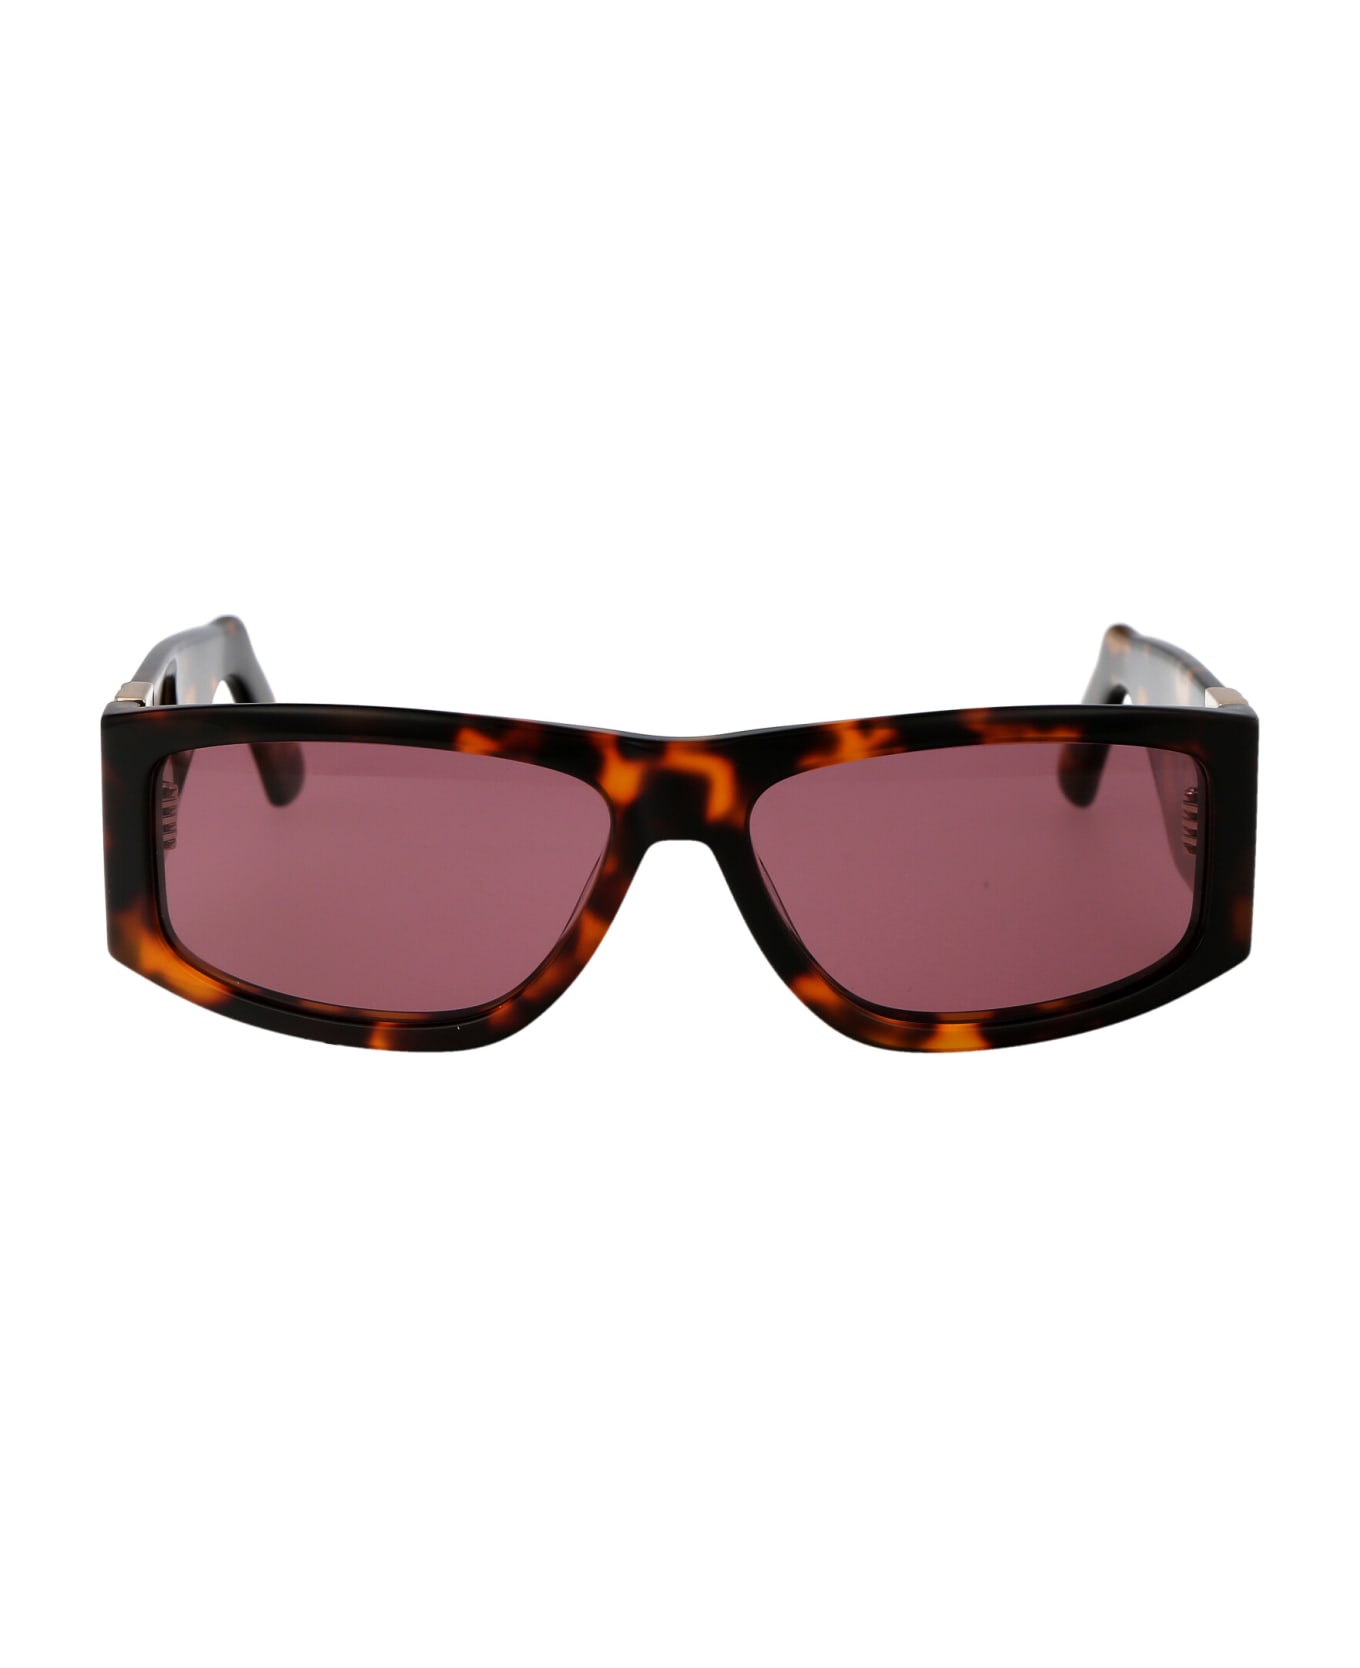 GCDS Gd0037 Sunglasses - 52S Avana Scura/Bordeaux